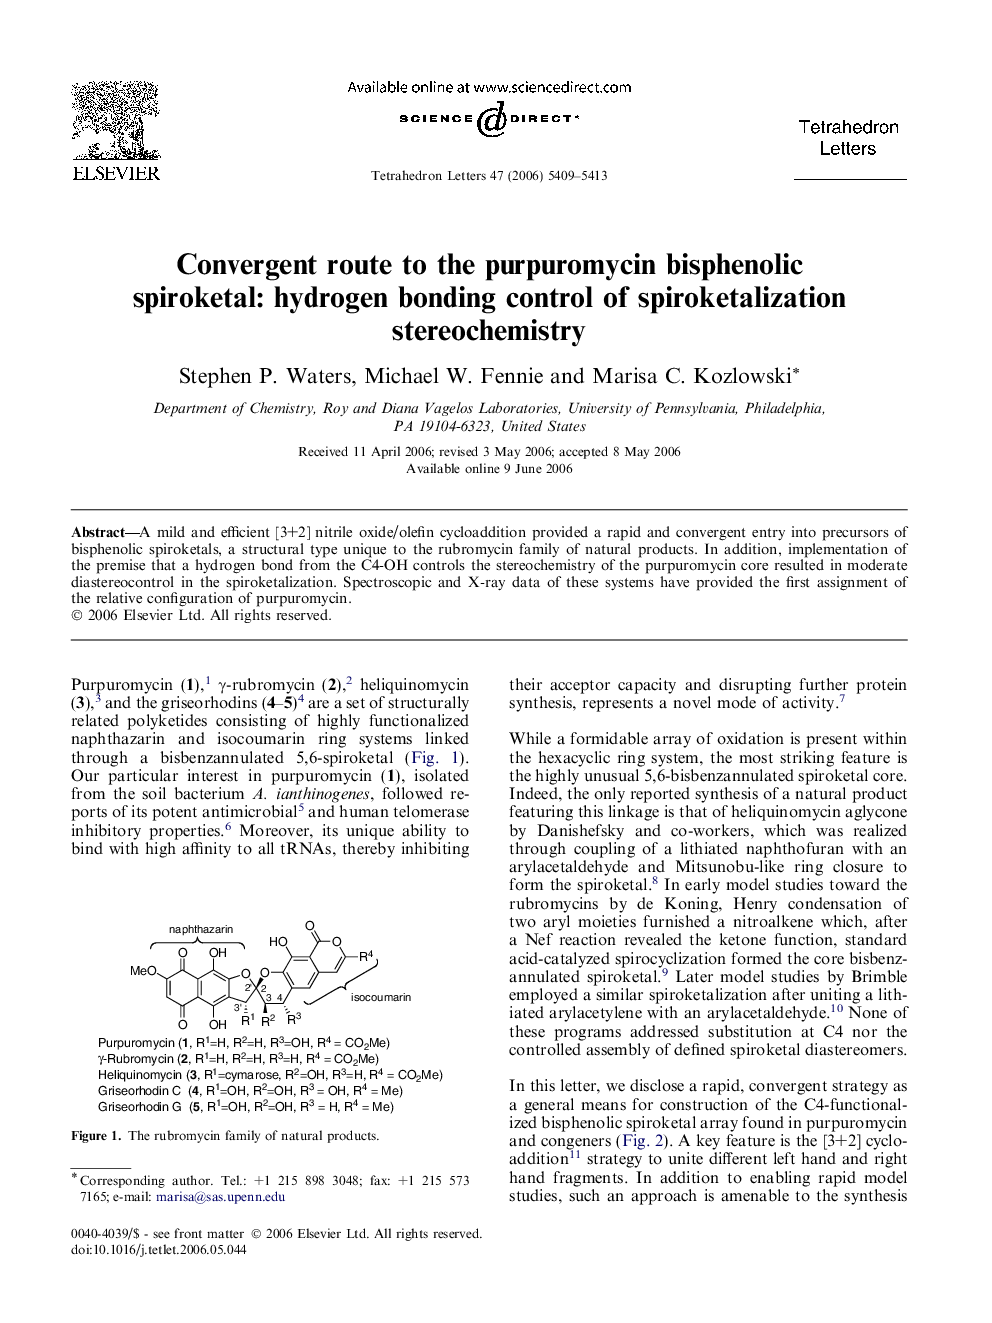 Convergent route to the purpuromycin bisphenolic spiroketal: hydrogen bonding control of spiroketalization stereochemistry